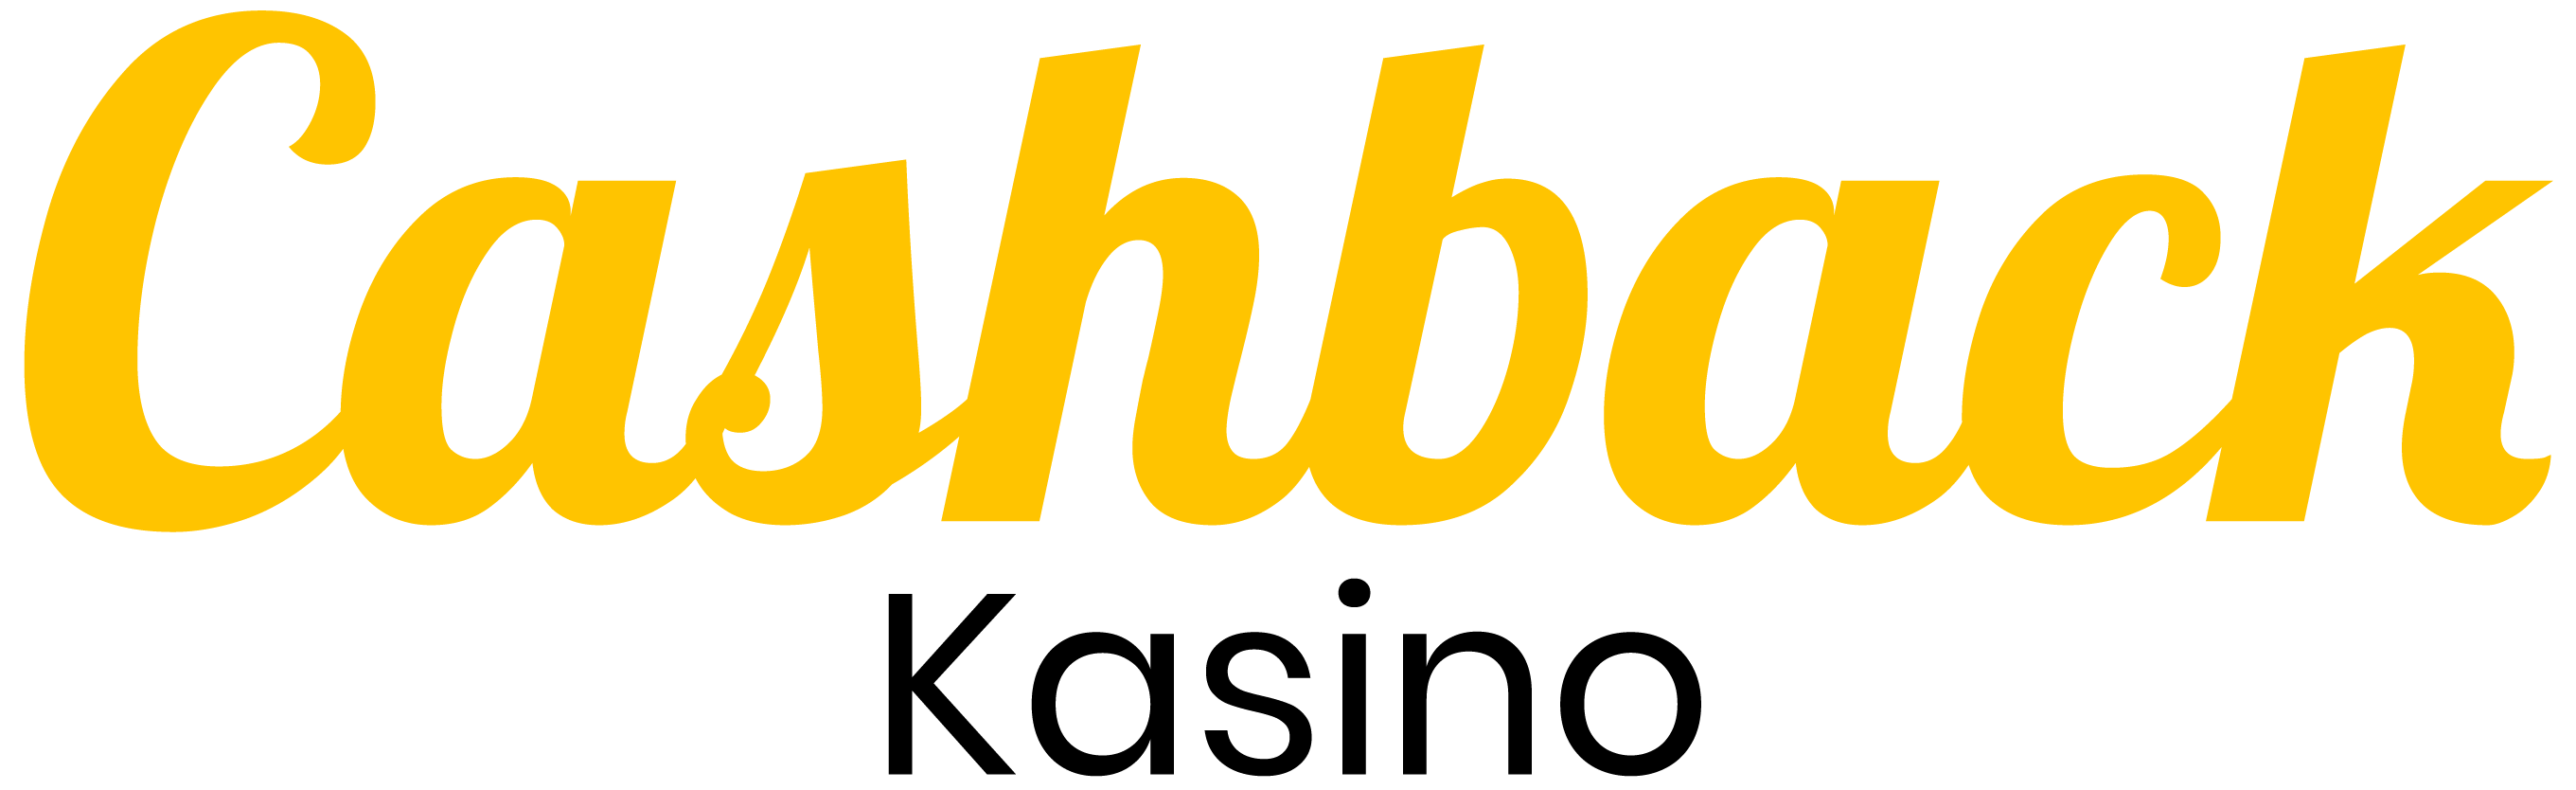 CashbackKasino Logo